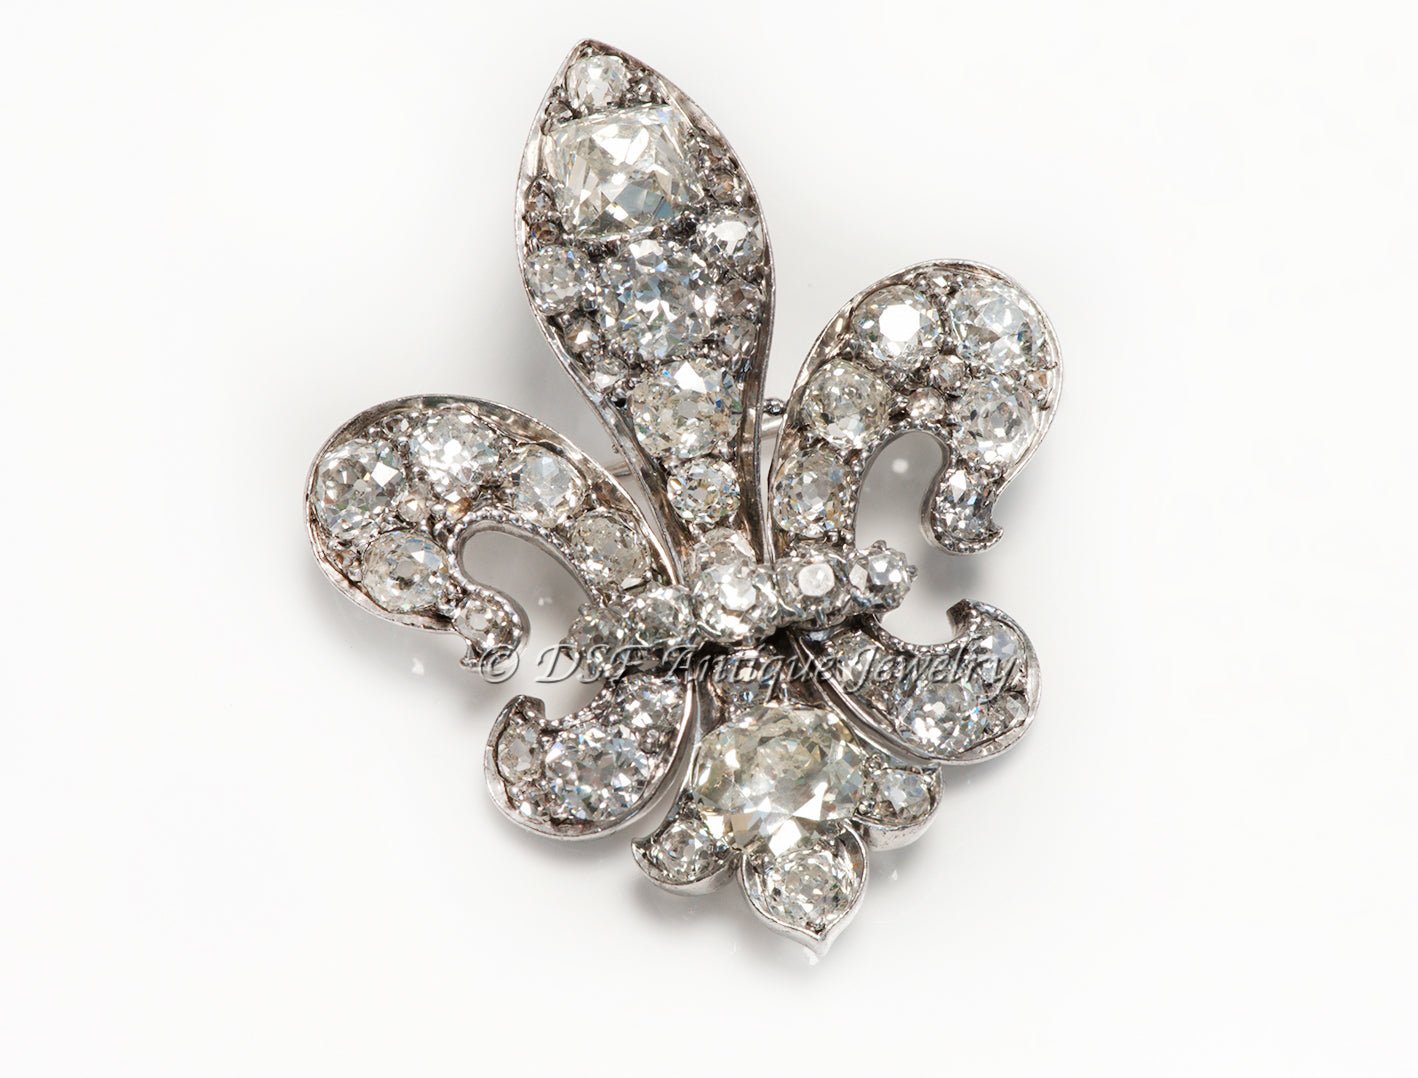 Antique Tiffany & Co. Diamond Fleur-de-Lis Pendant Brooch